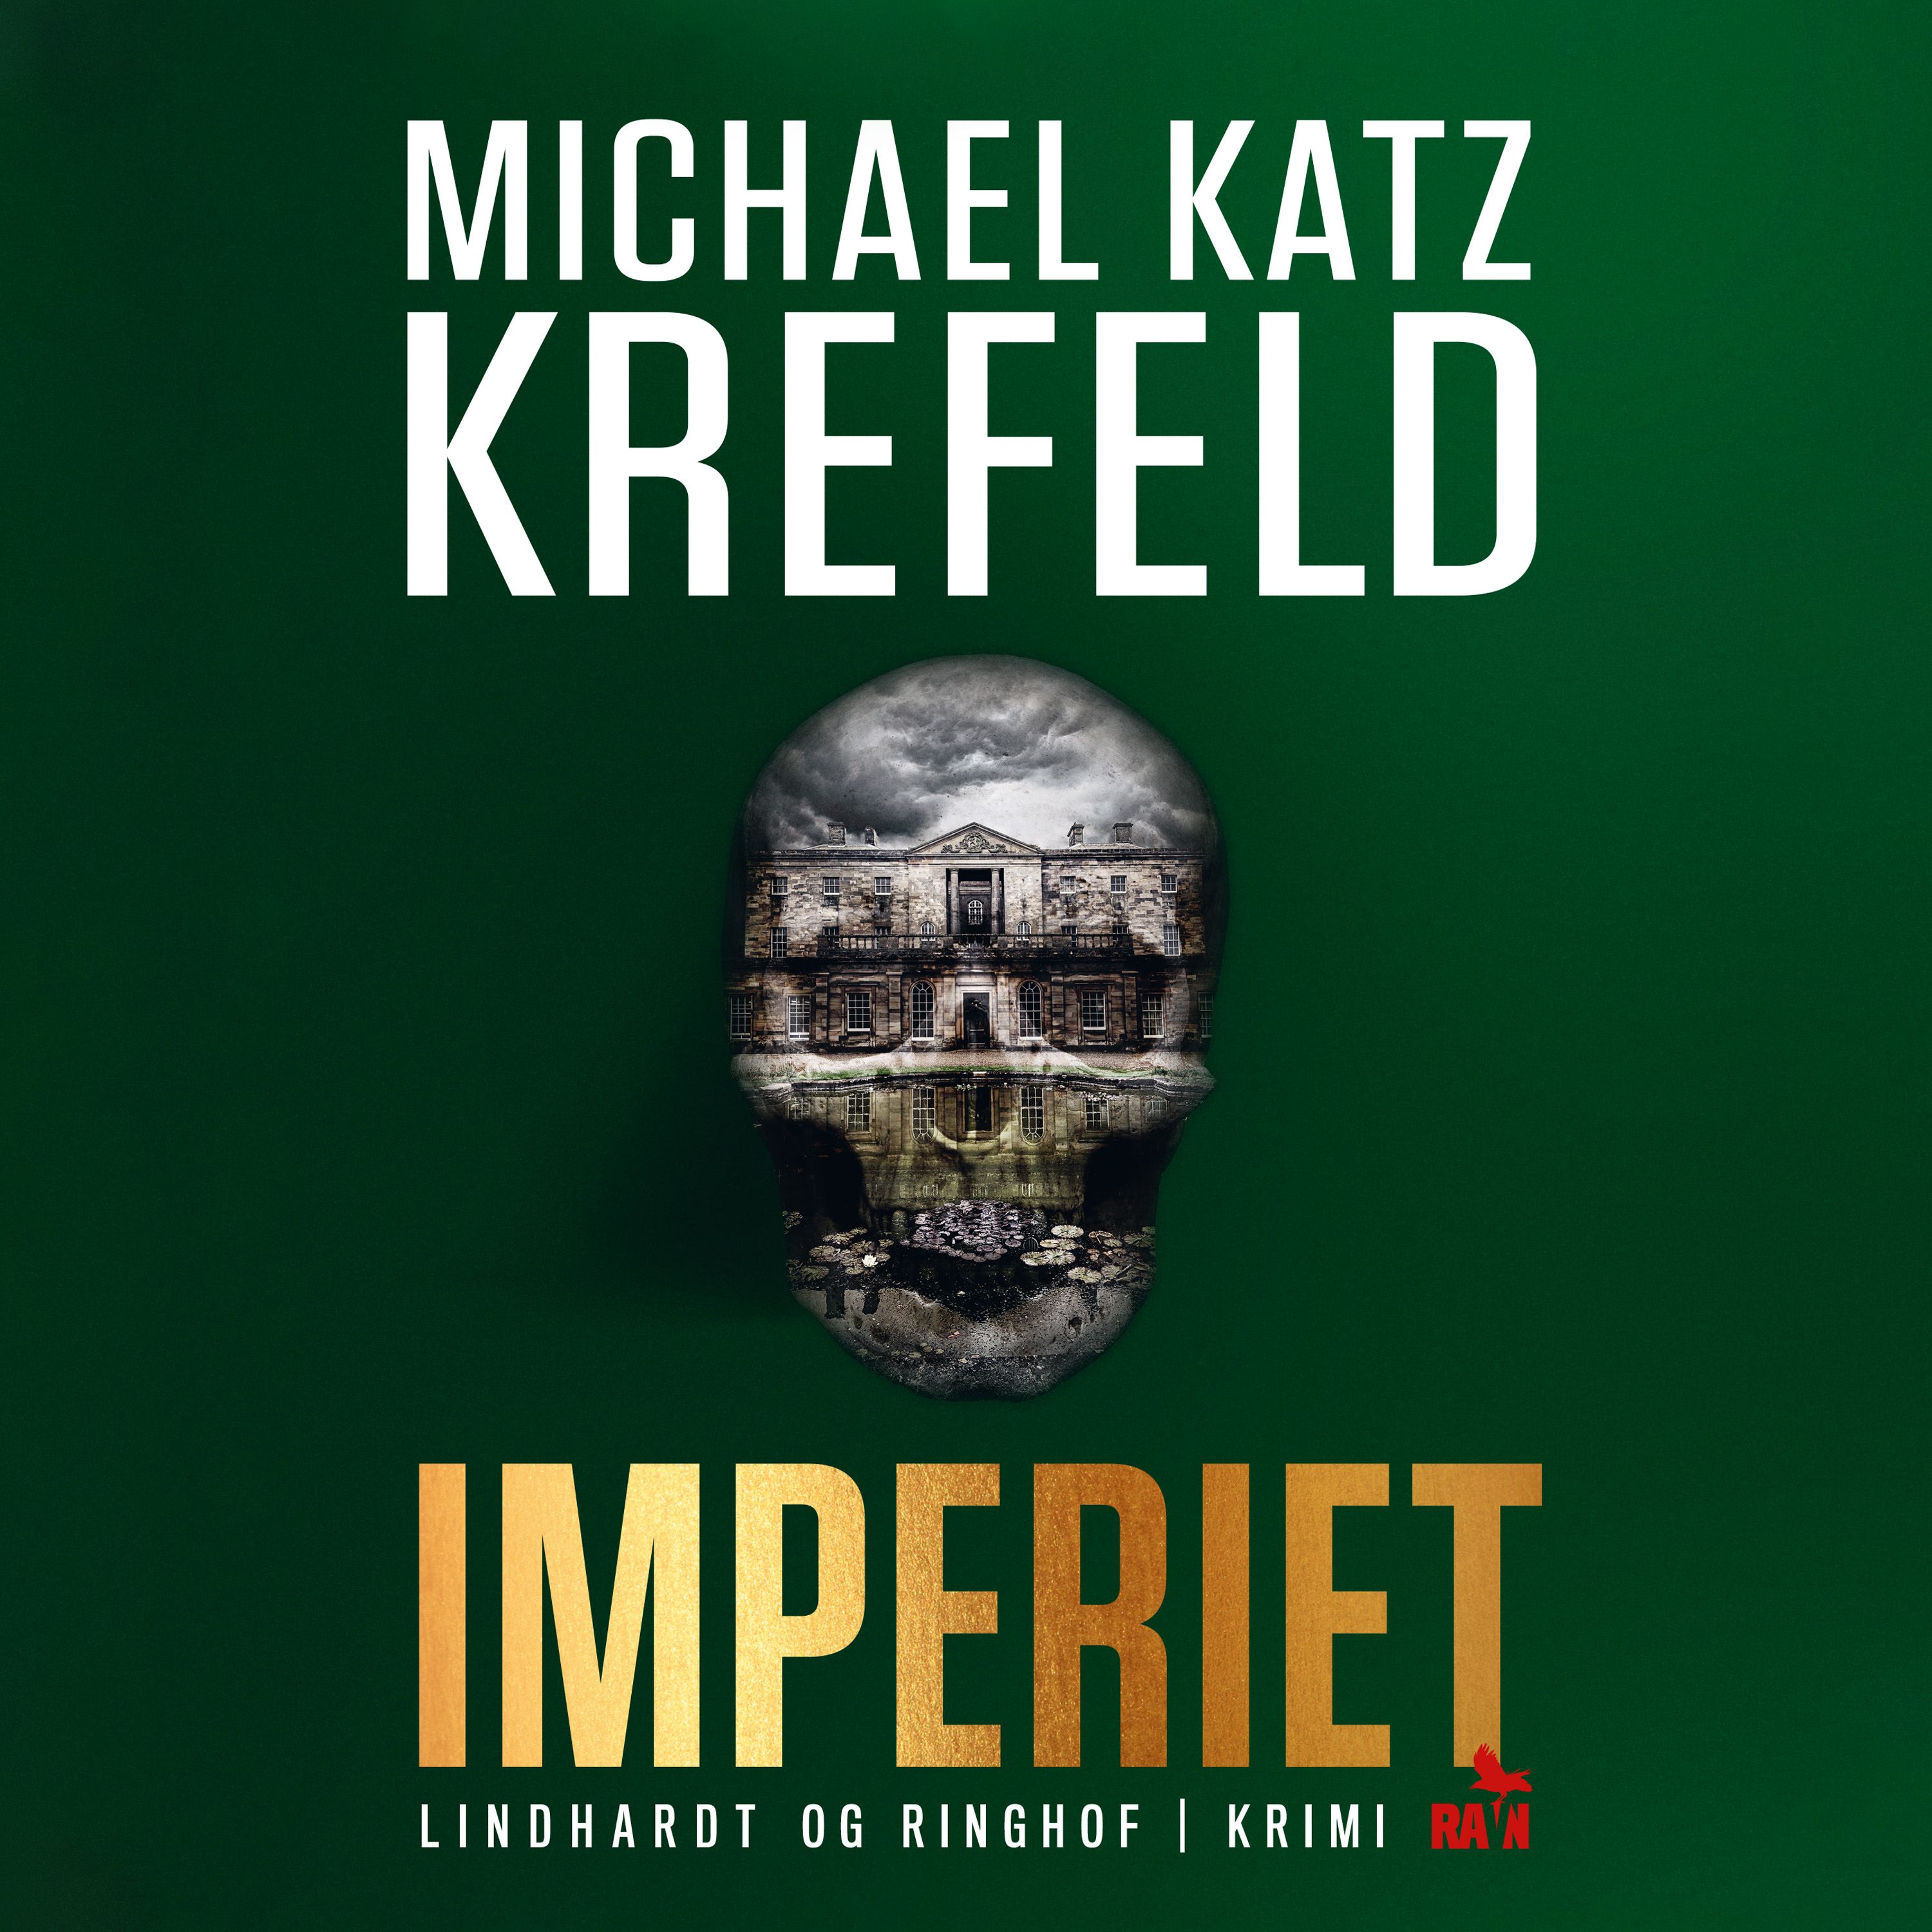 Imperiet, ljudbok av Michael Katz Krefeld